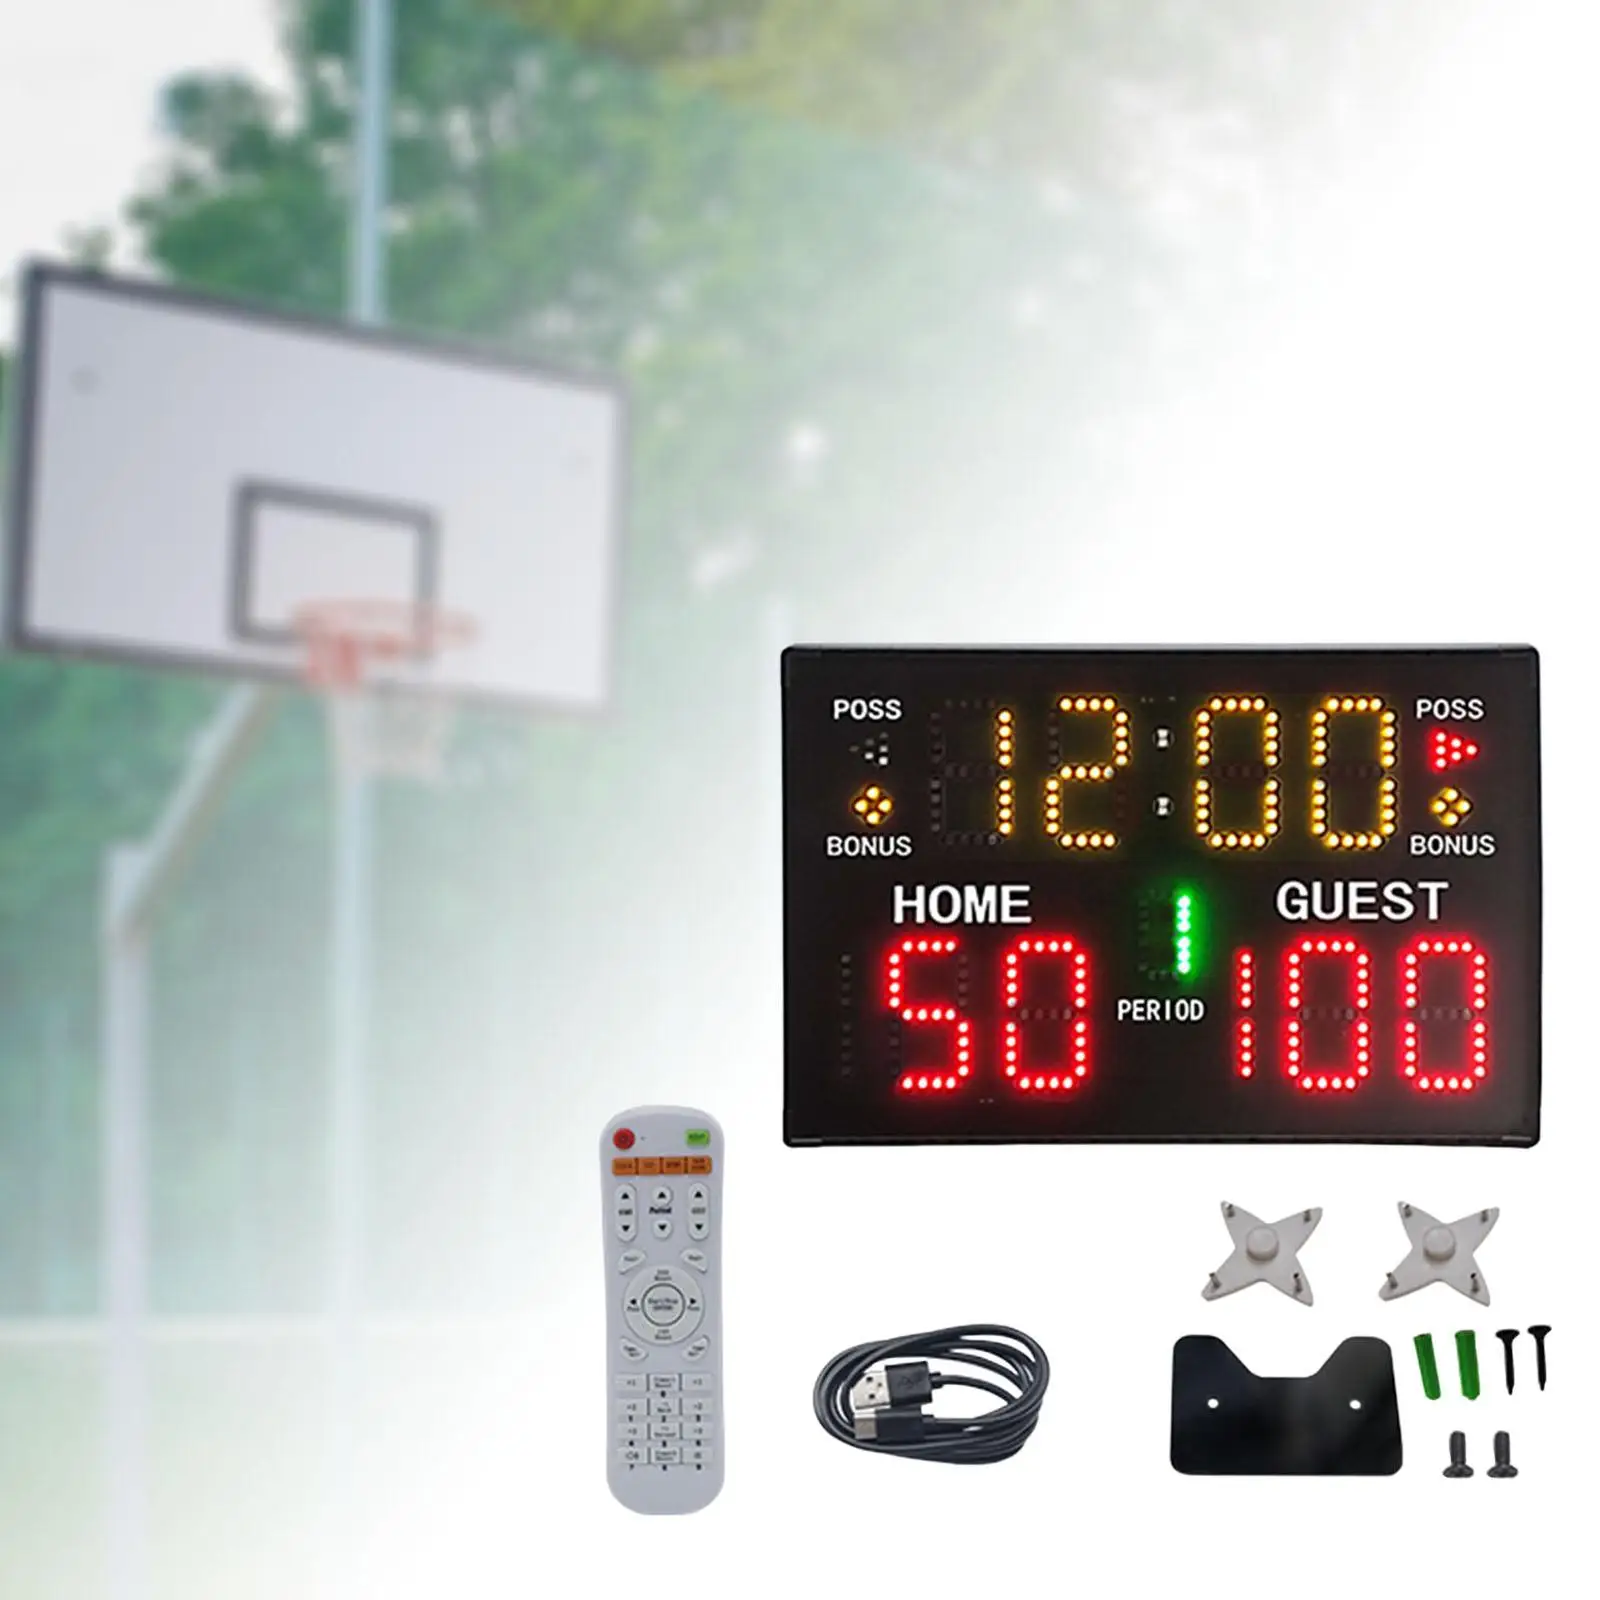 Digital Scoreboard Professional Electronic Scoreboard for Volleyball Outdoor